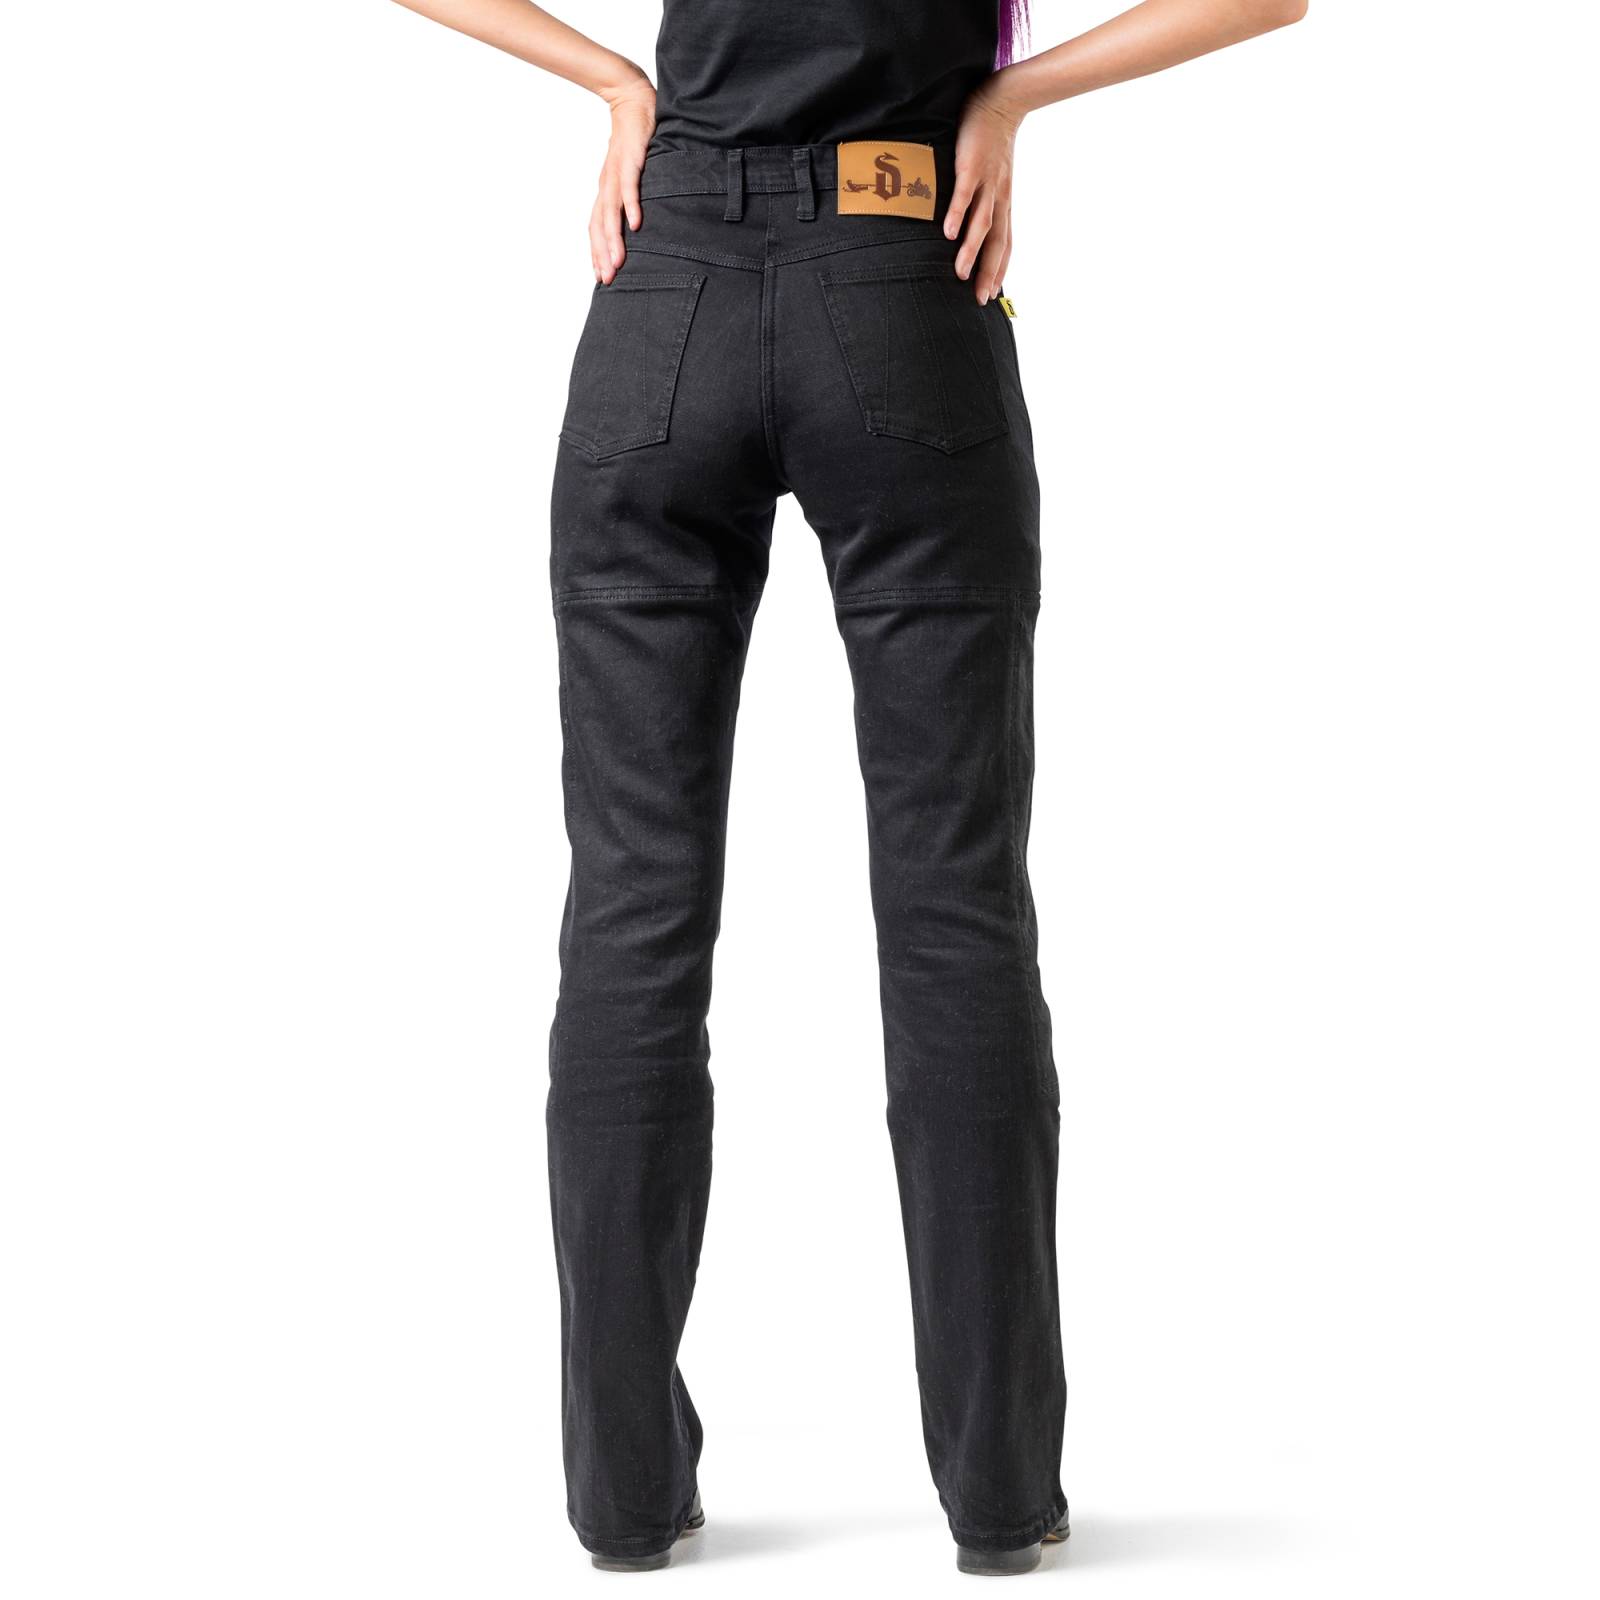 https://www.ridersline.com.au/shop/1818-atmn_large_2x/ladies-draggin-classic-jeans.jpg